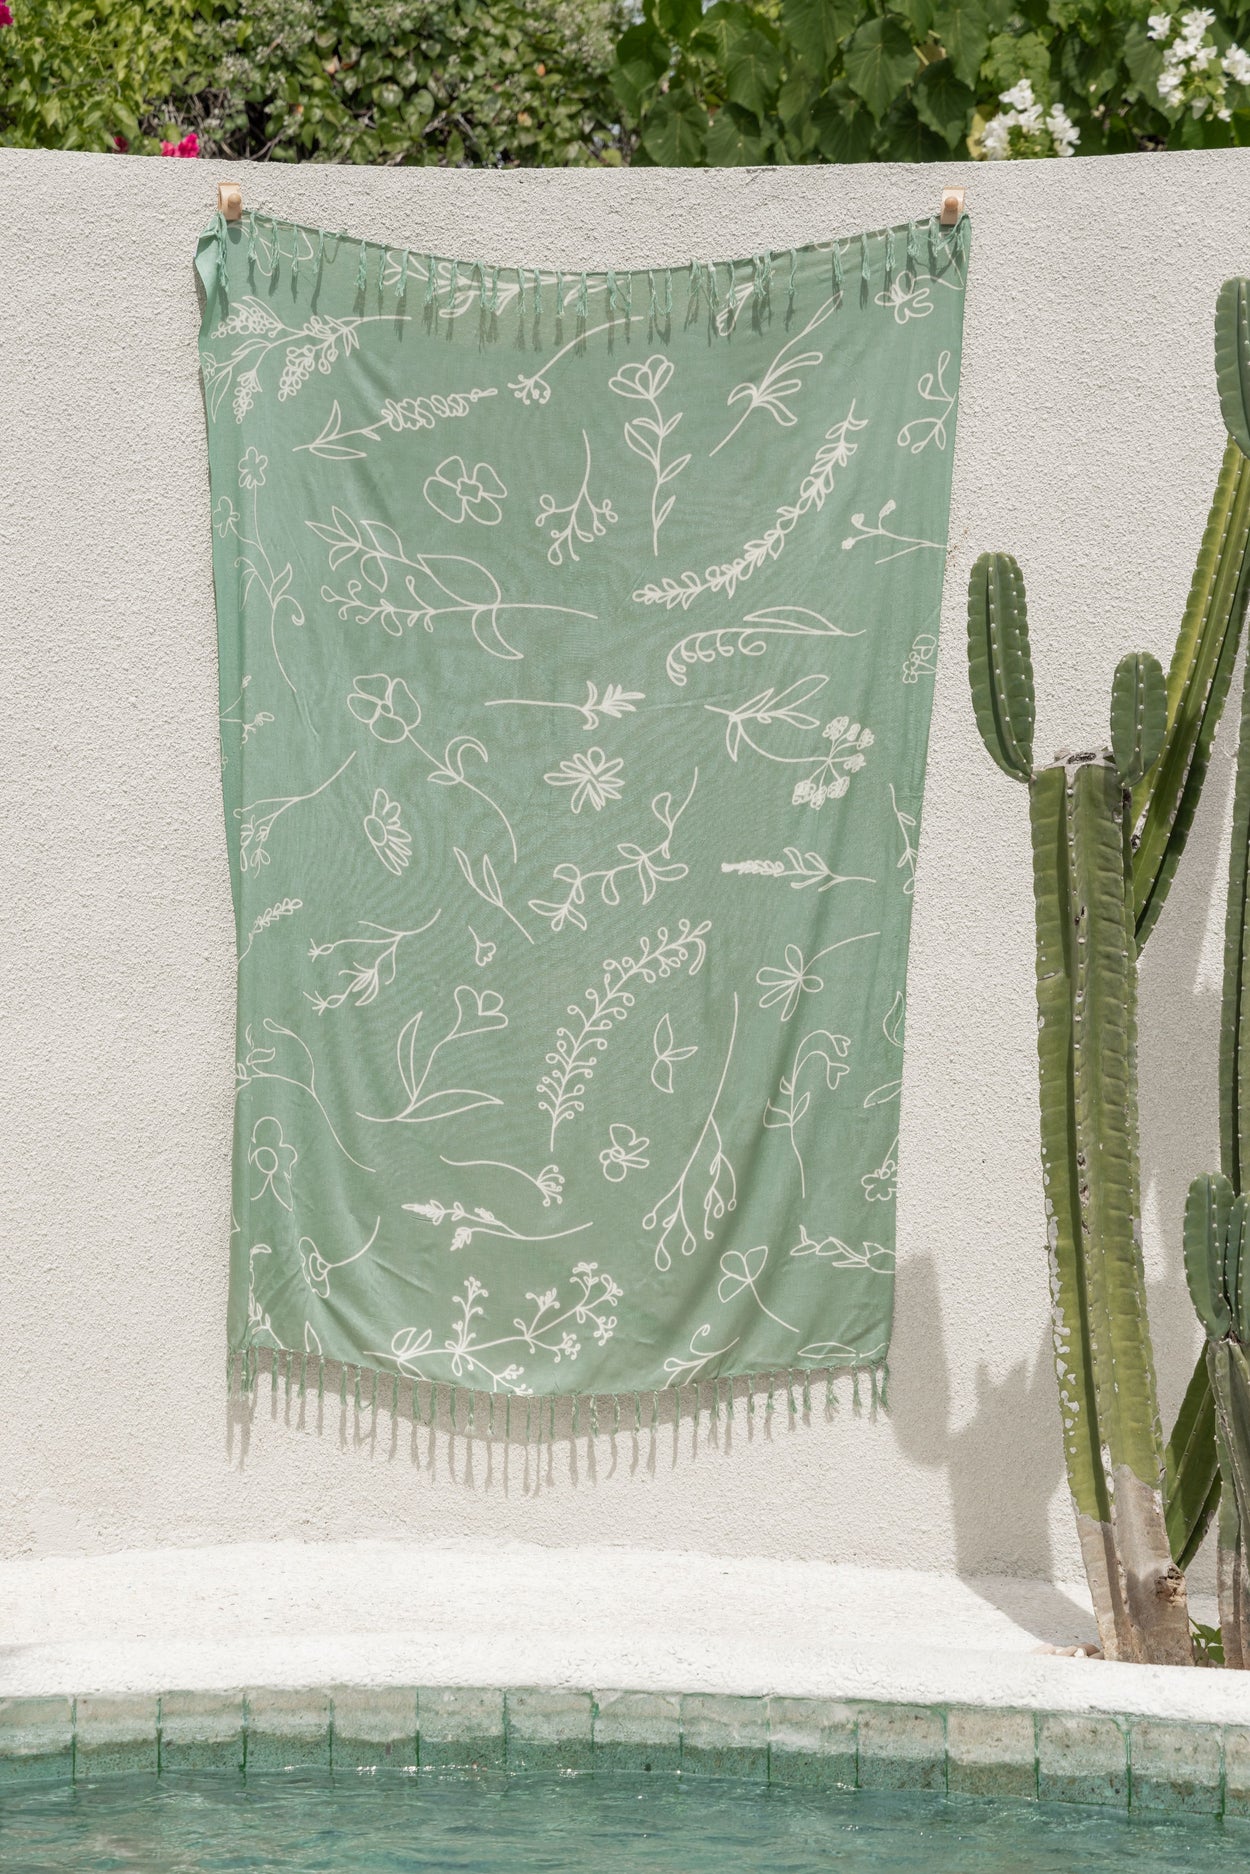 Wildflower Tapestry